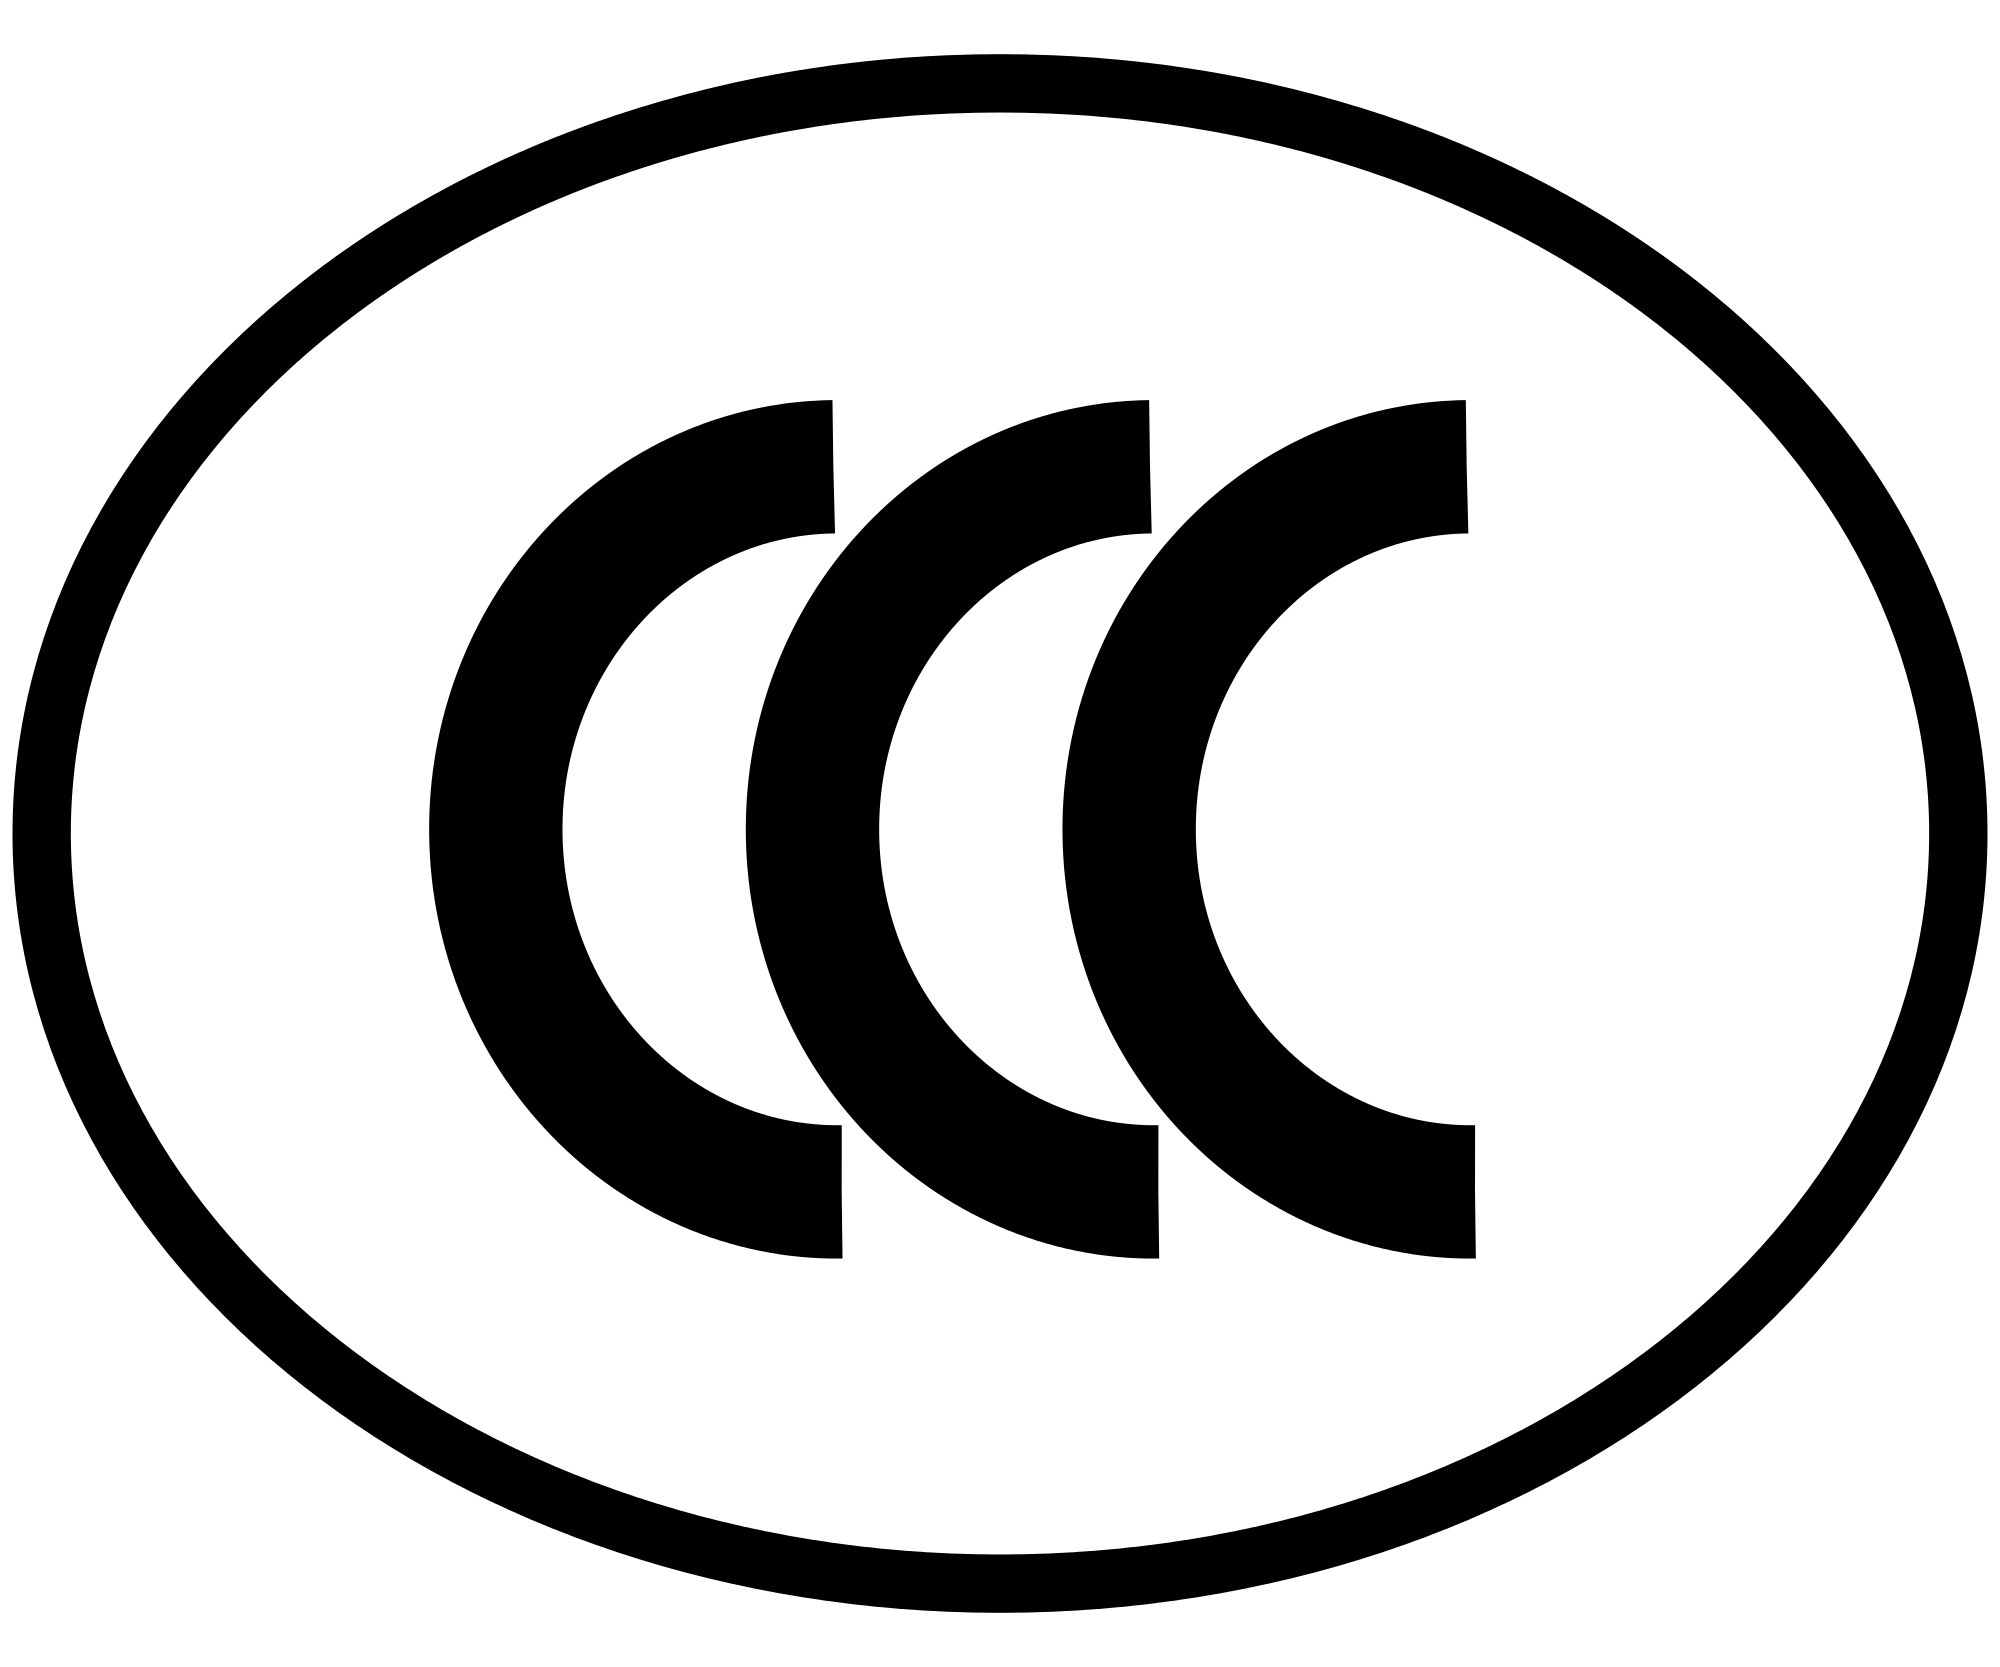 Black and White Certificate Logo - China Compulsory Certificate